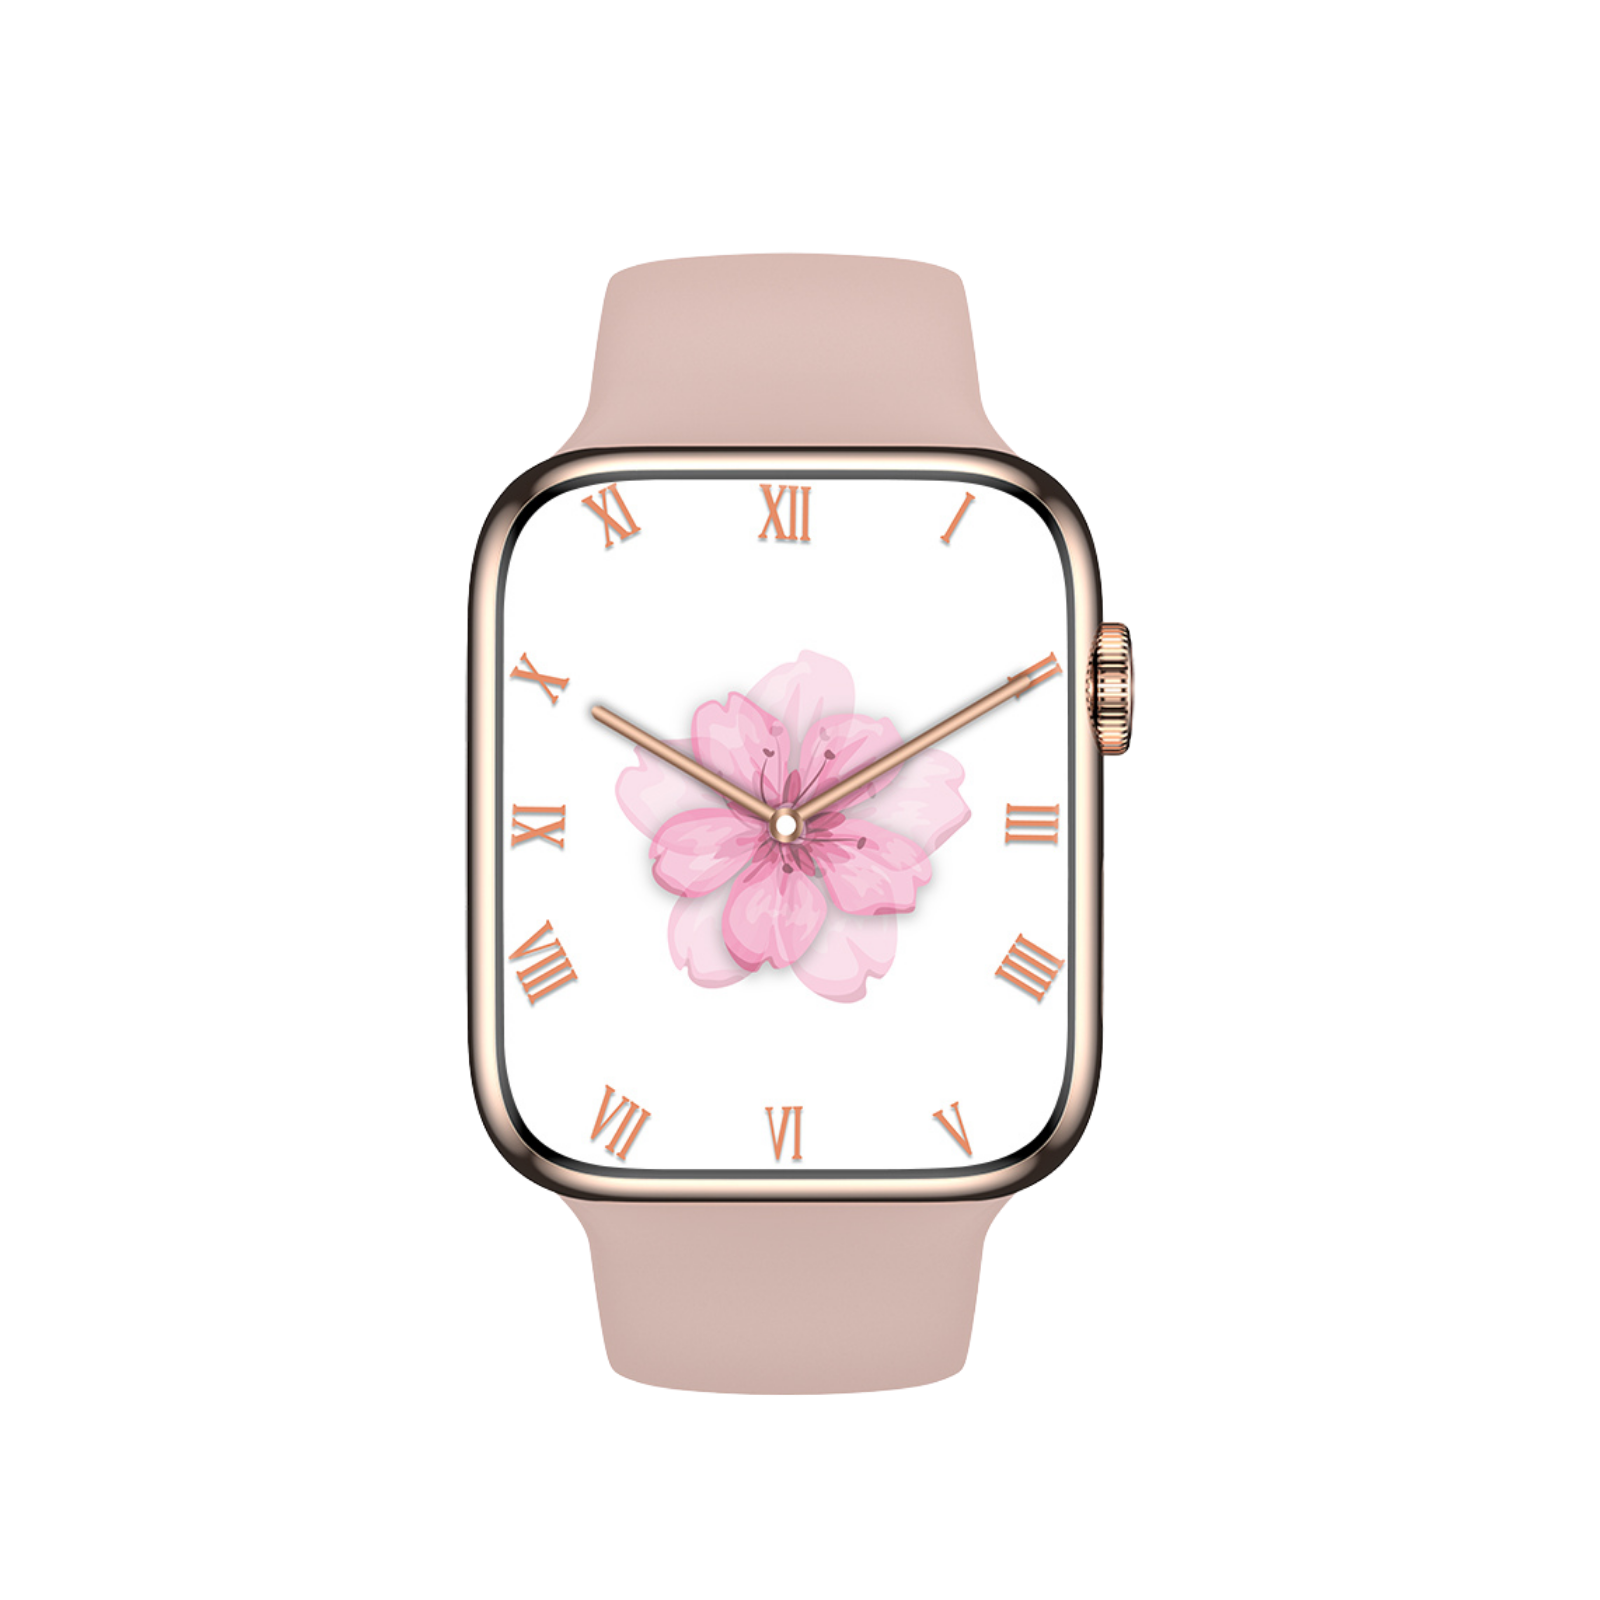 Watch 9 Mini Akıllı Saat (Valentine Edition)